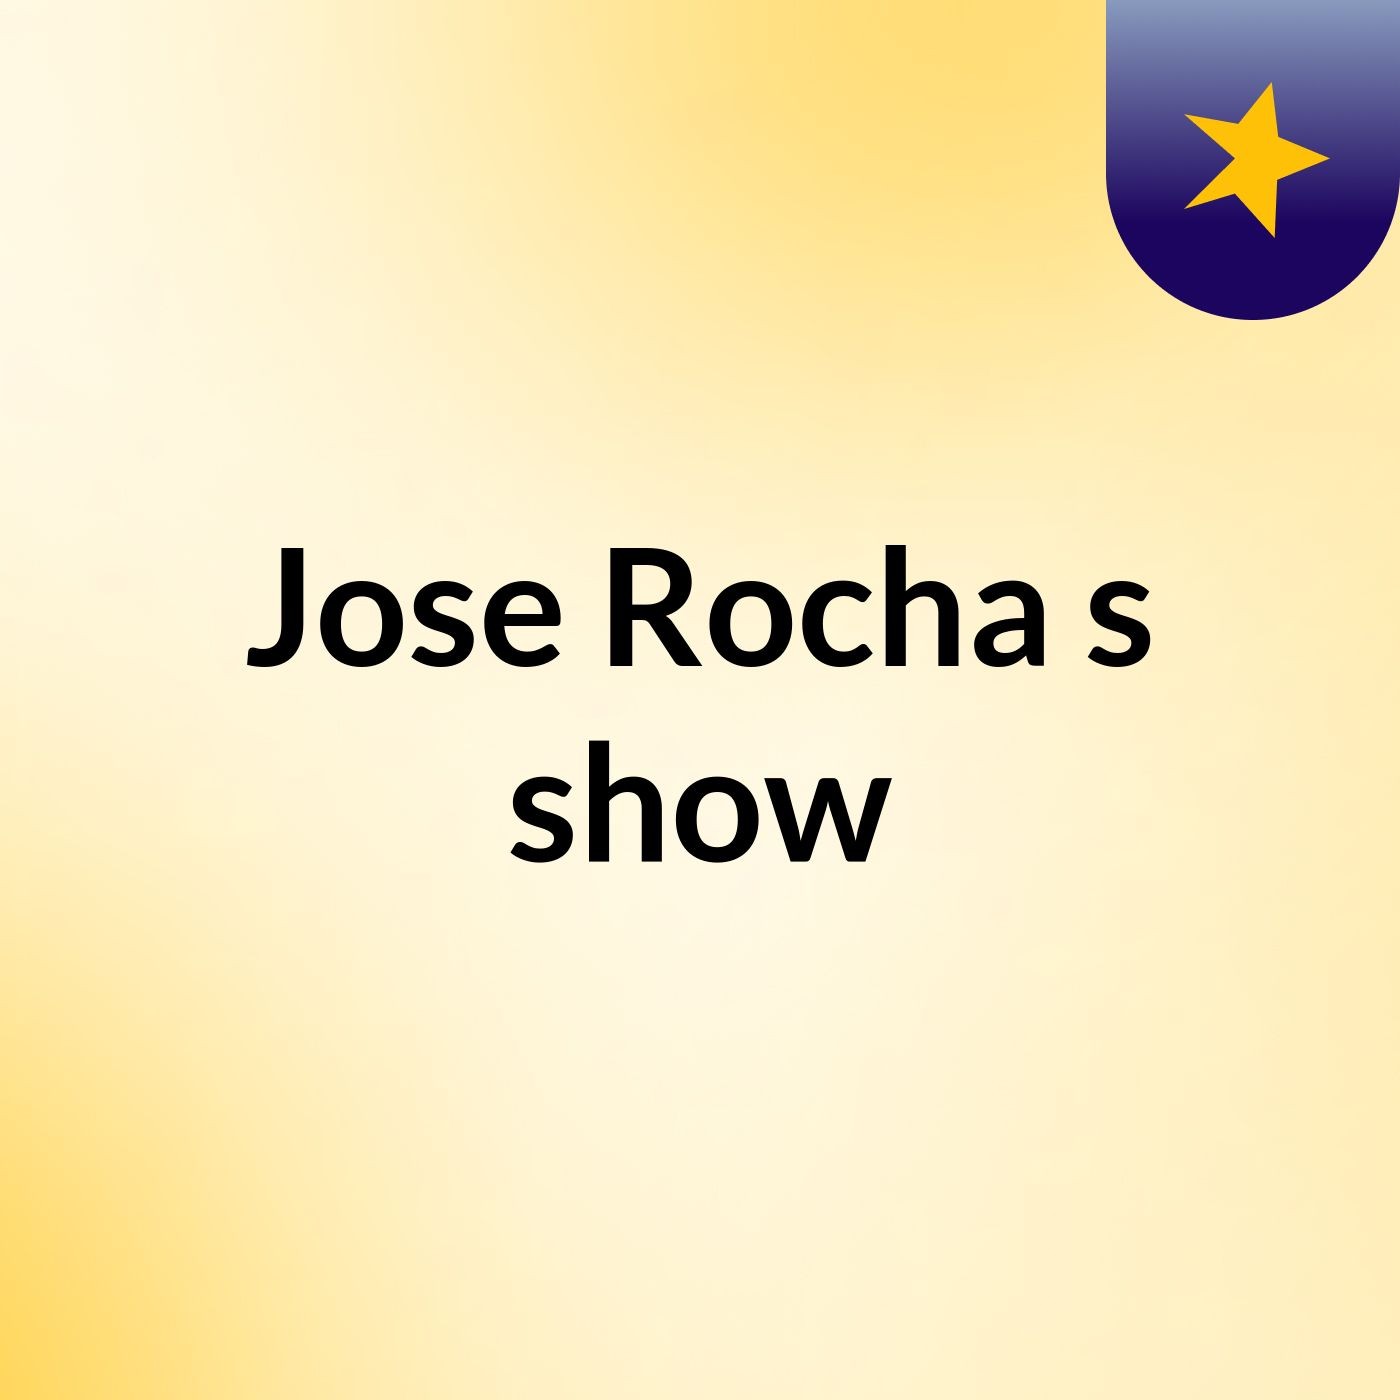 Jose Rocha's show